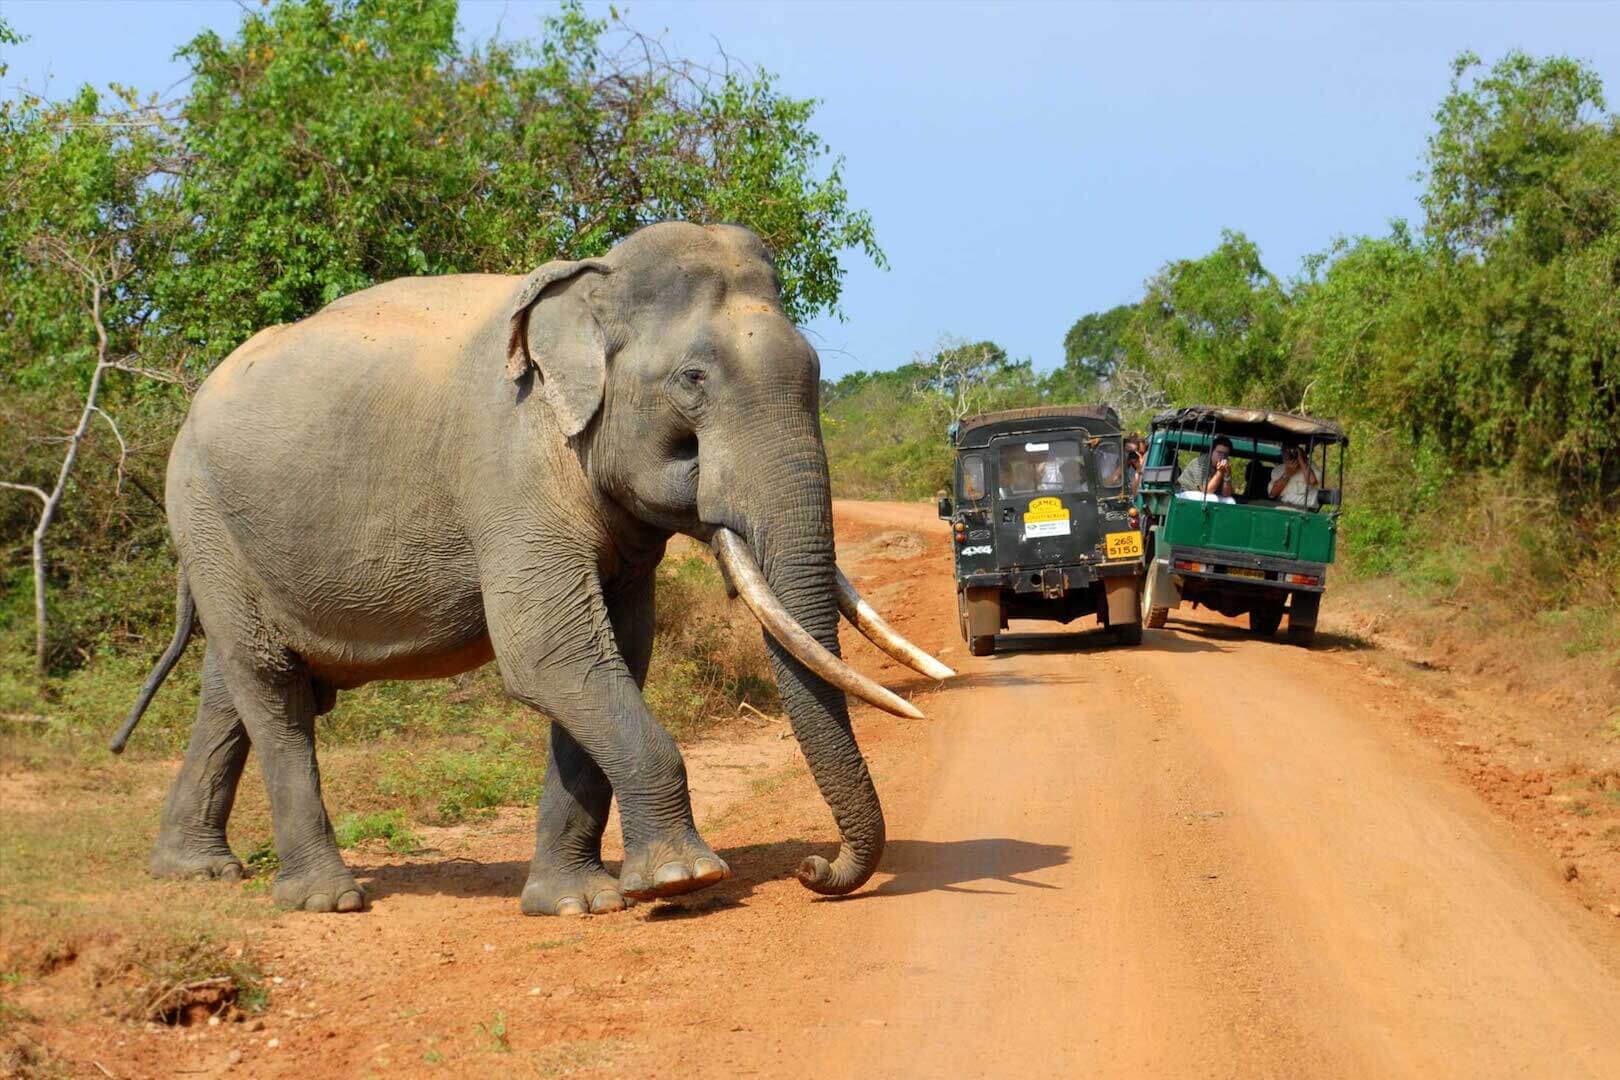 El Elefante Cruza El Camino del Safari Jeep